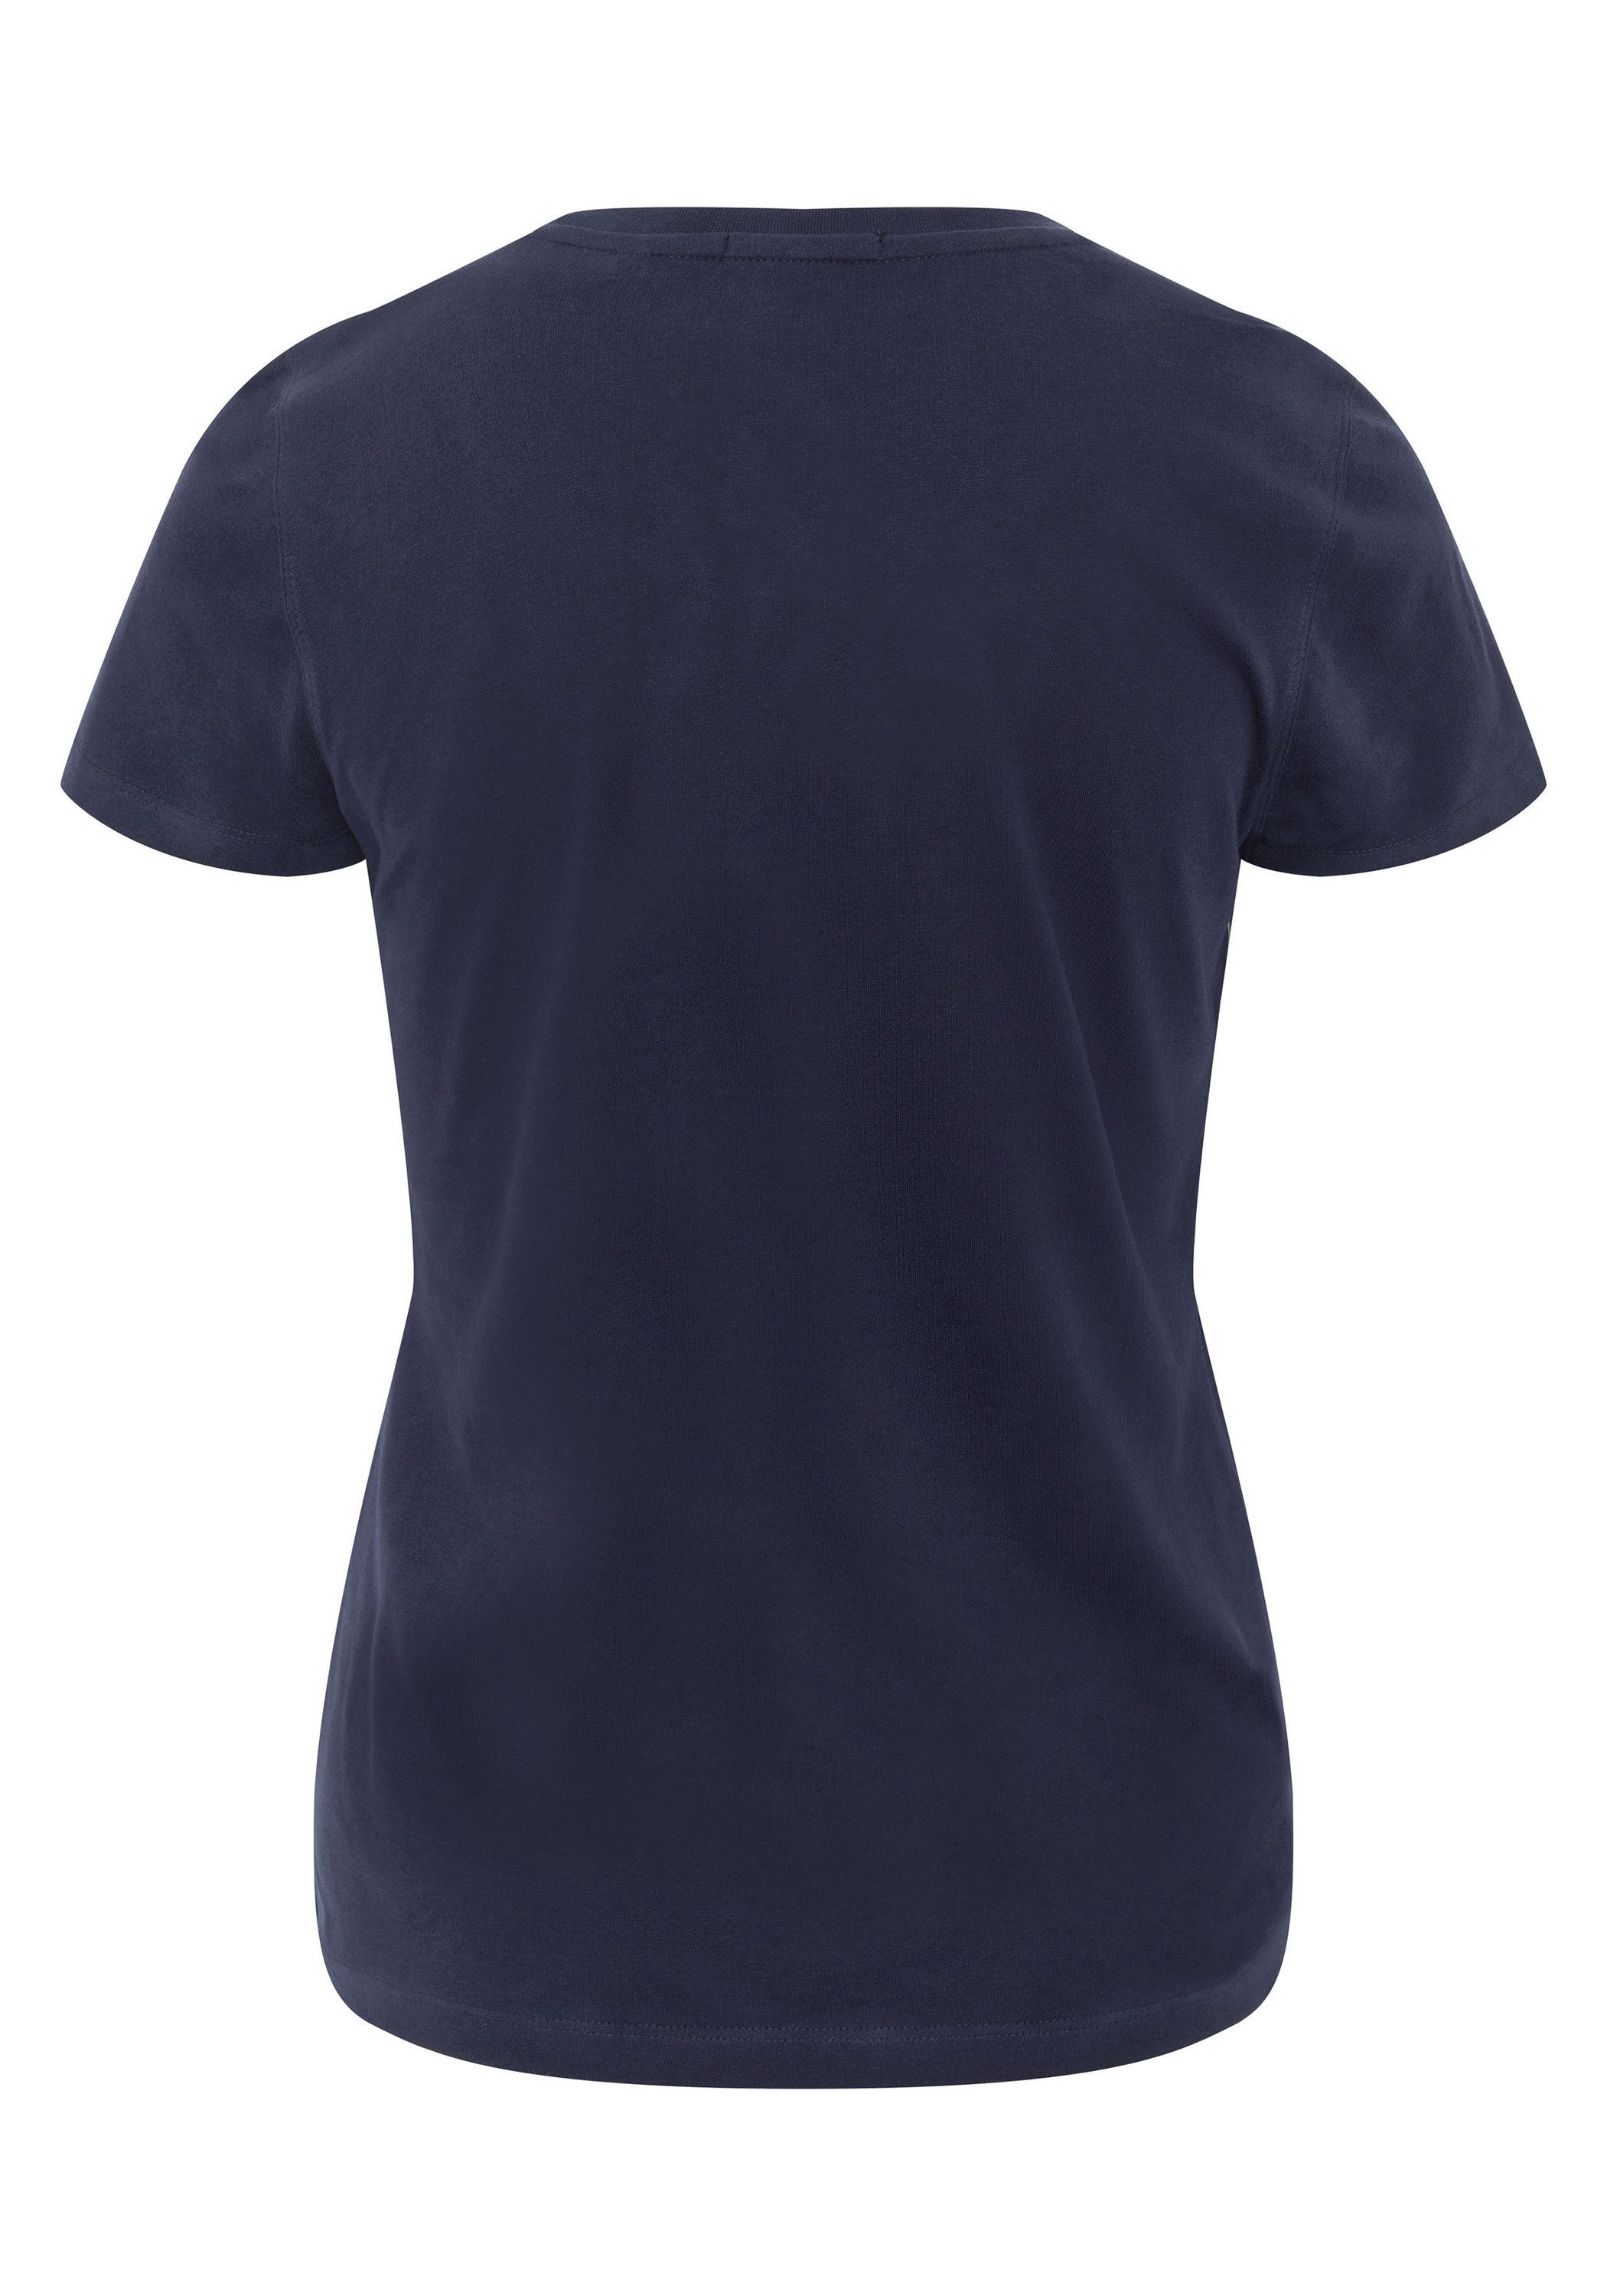 1 Farbverlauf-Optik Logo T-Shirt in mit Sky Night Chiemsee Print-Shirt